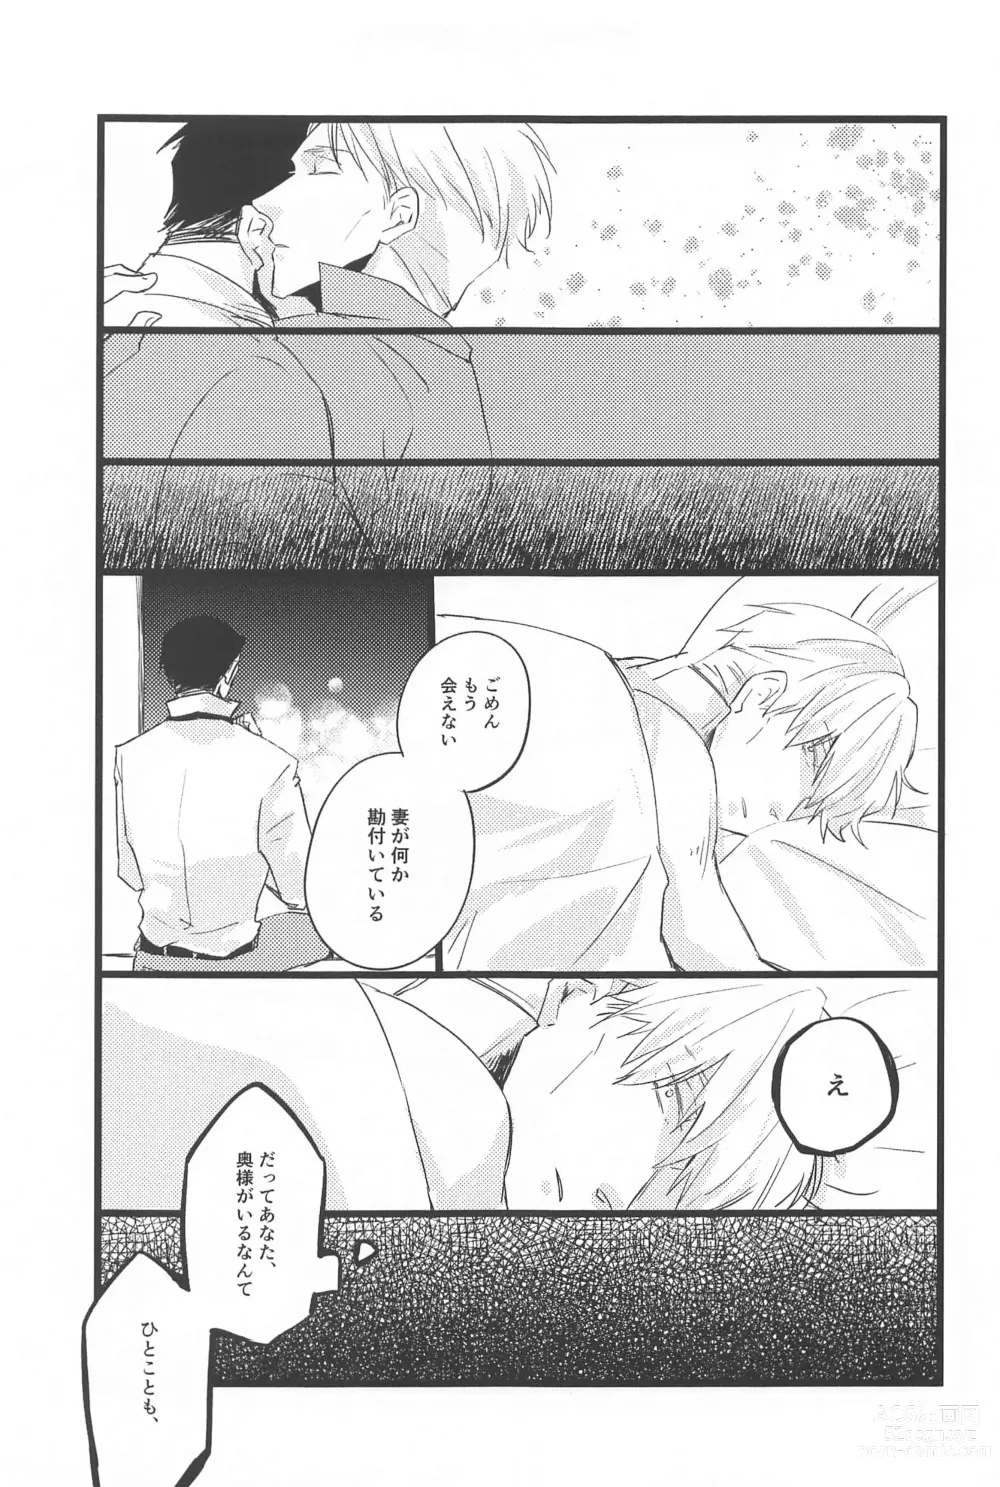 Page 26 of doujinshi timeless memory 2